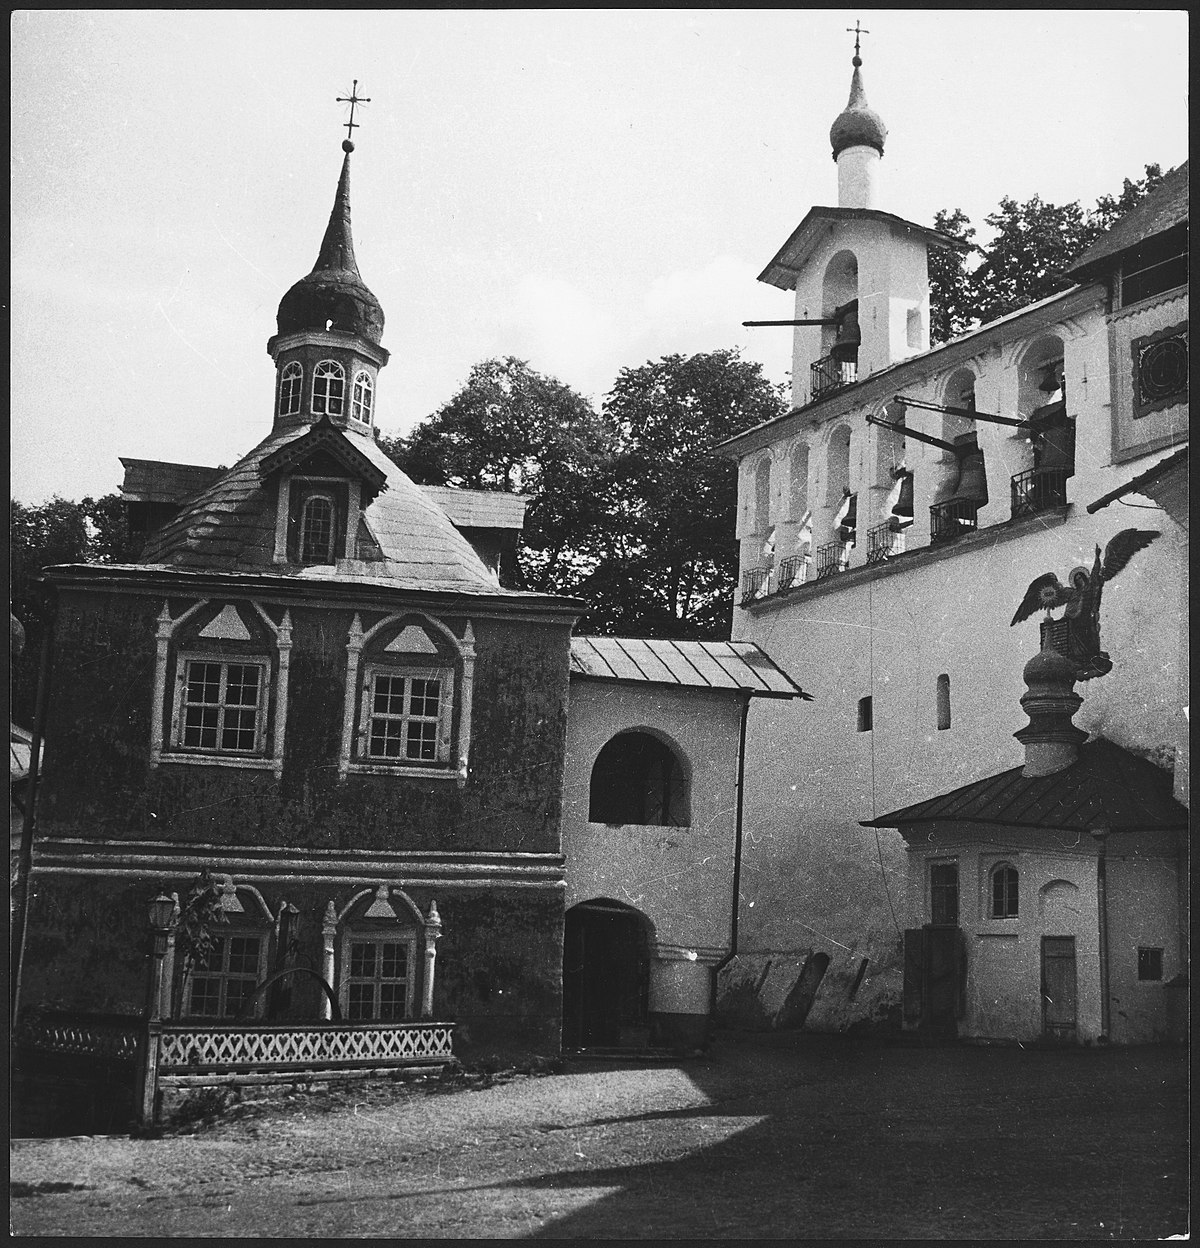 Estland, Petseri (Pechory): Kloster; Gebäude des Klosters